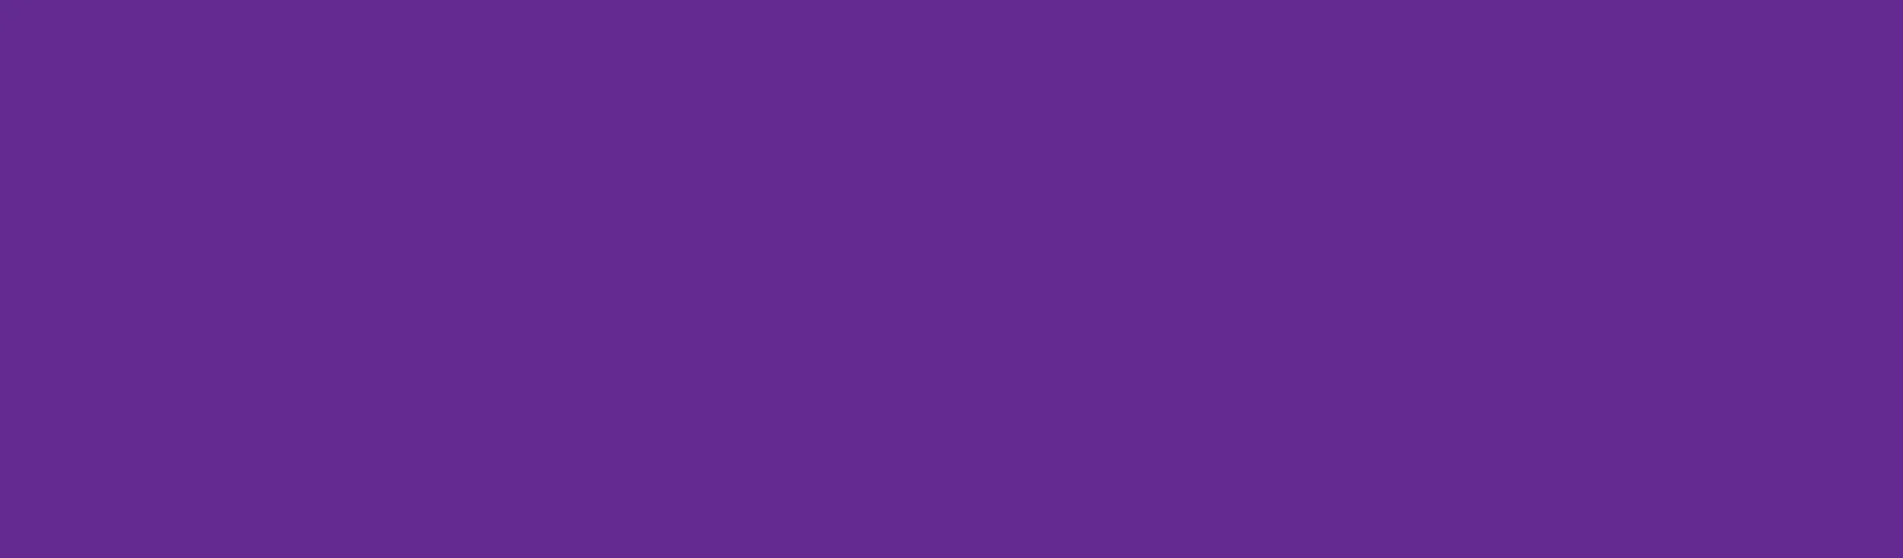 purple_1903x558